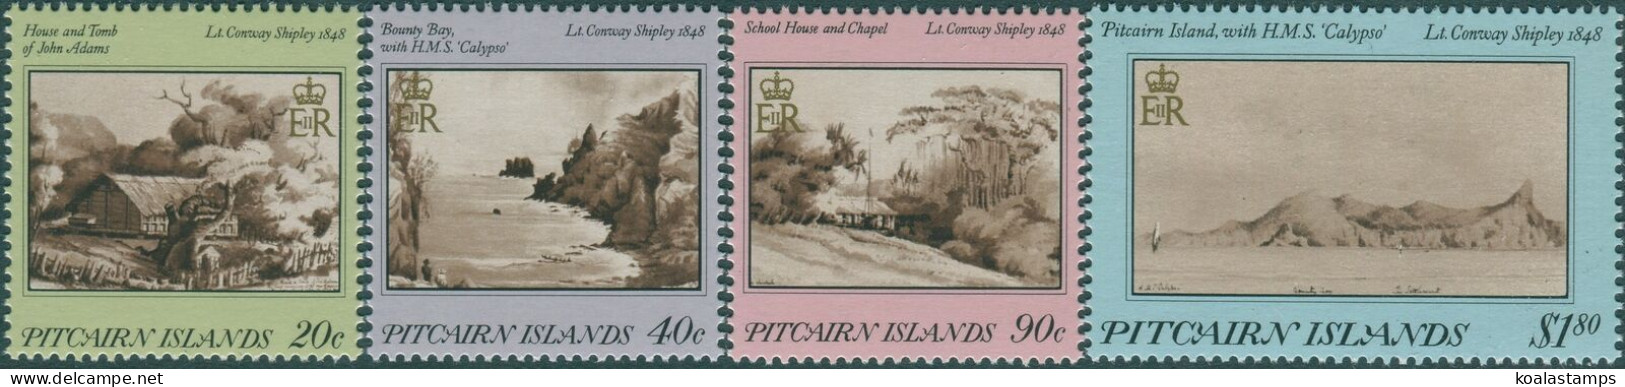 Pitcairn Islands 1987 SG308-311 Paintings Set MNH - Pitcairn